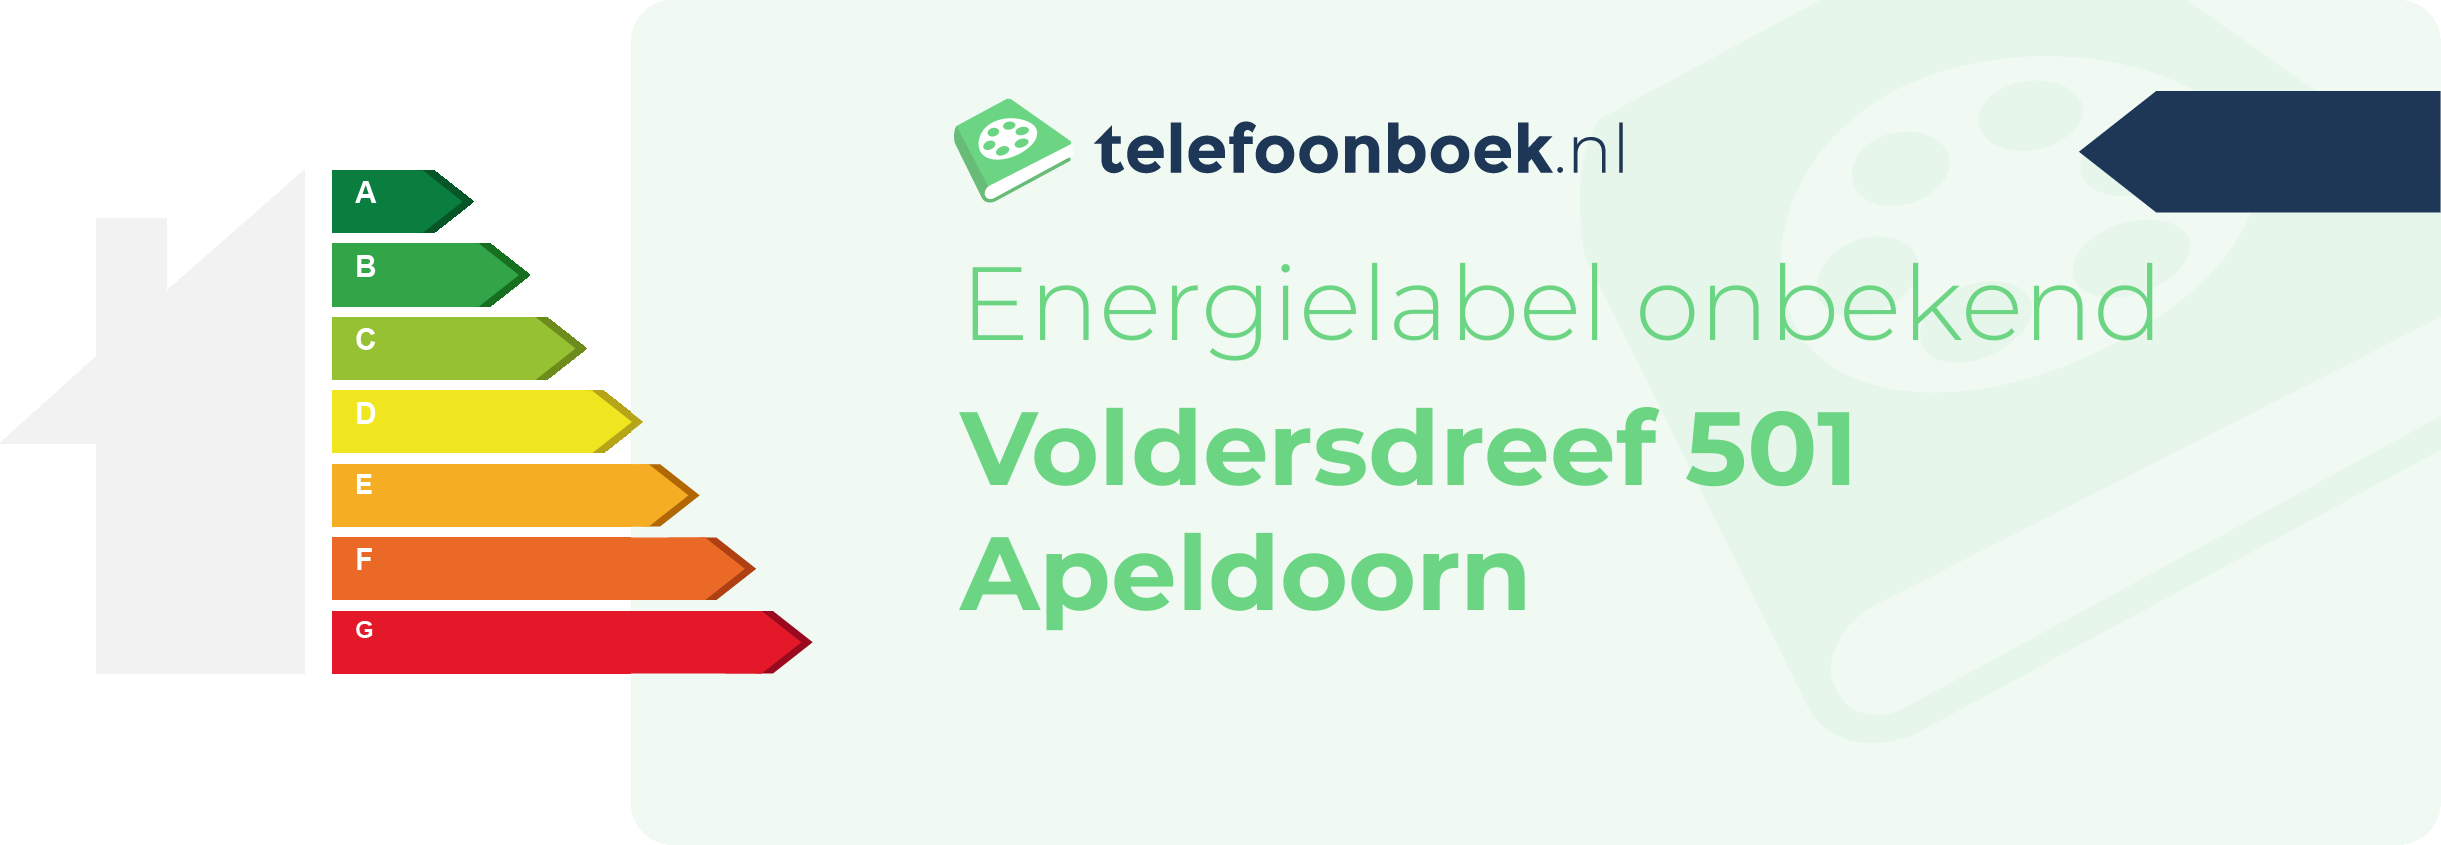 Energielabel Voldersdreef 501 Apeldoorn